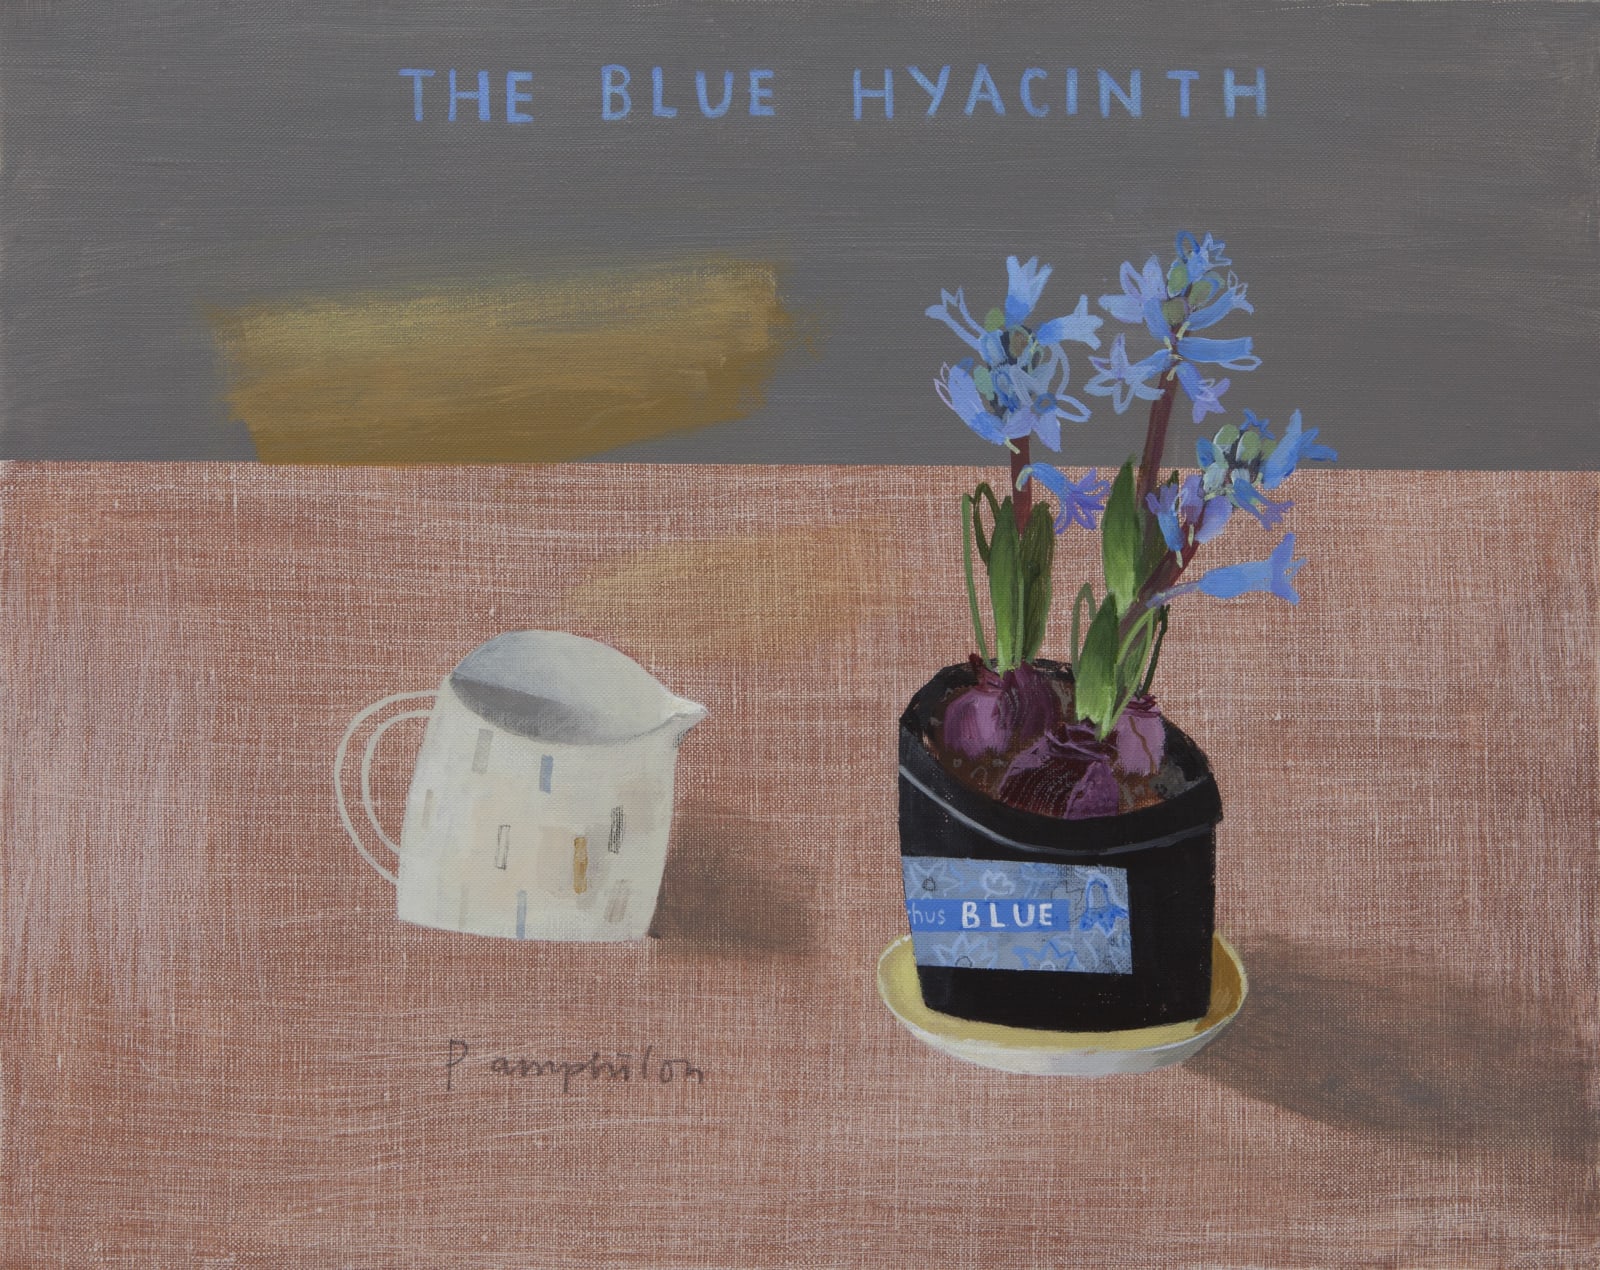 Elaine Pamphilon, The Blue Hyacinth